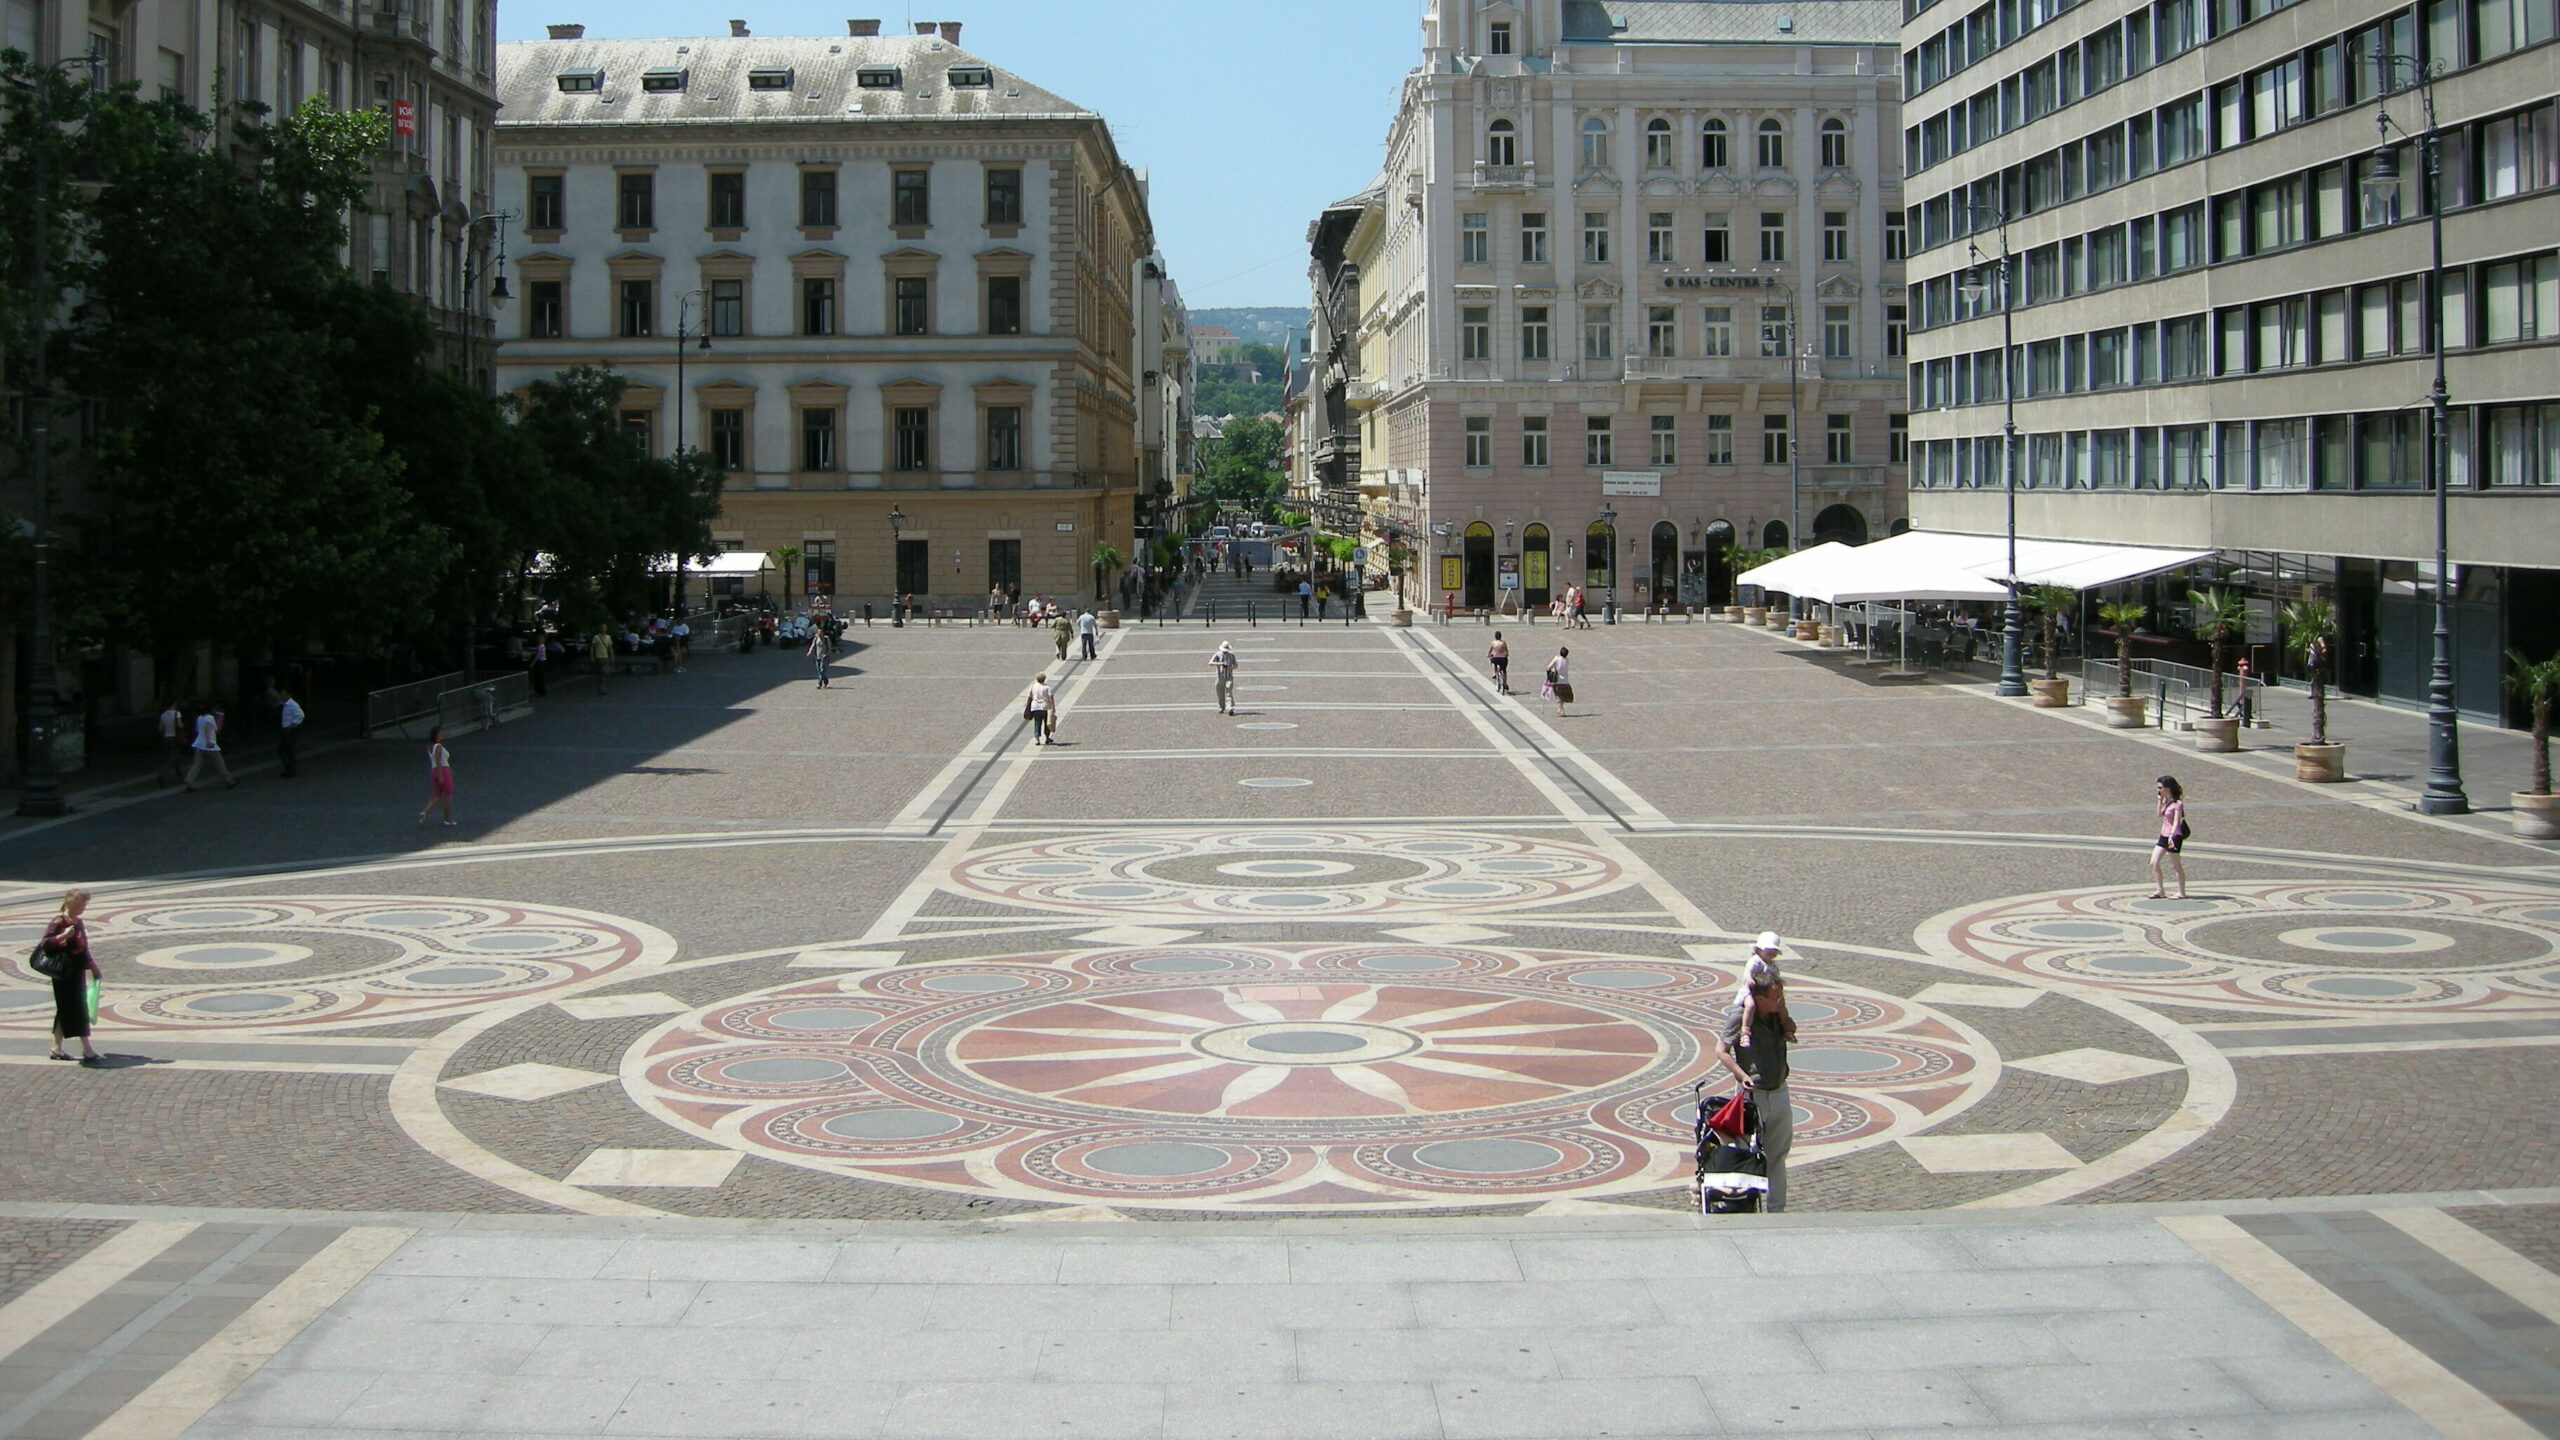 Szent István square, Budapest